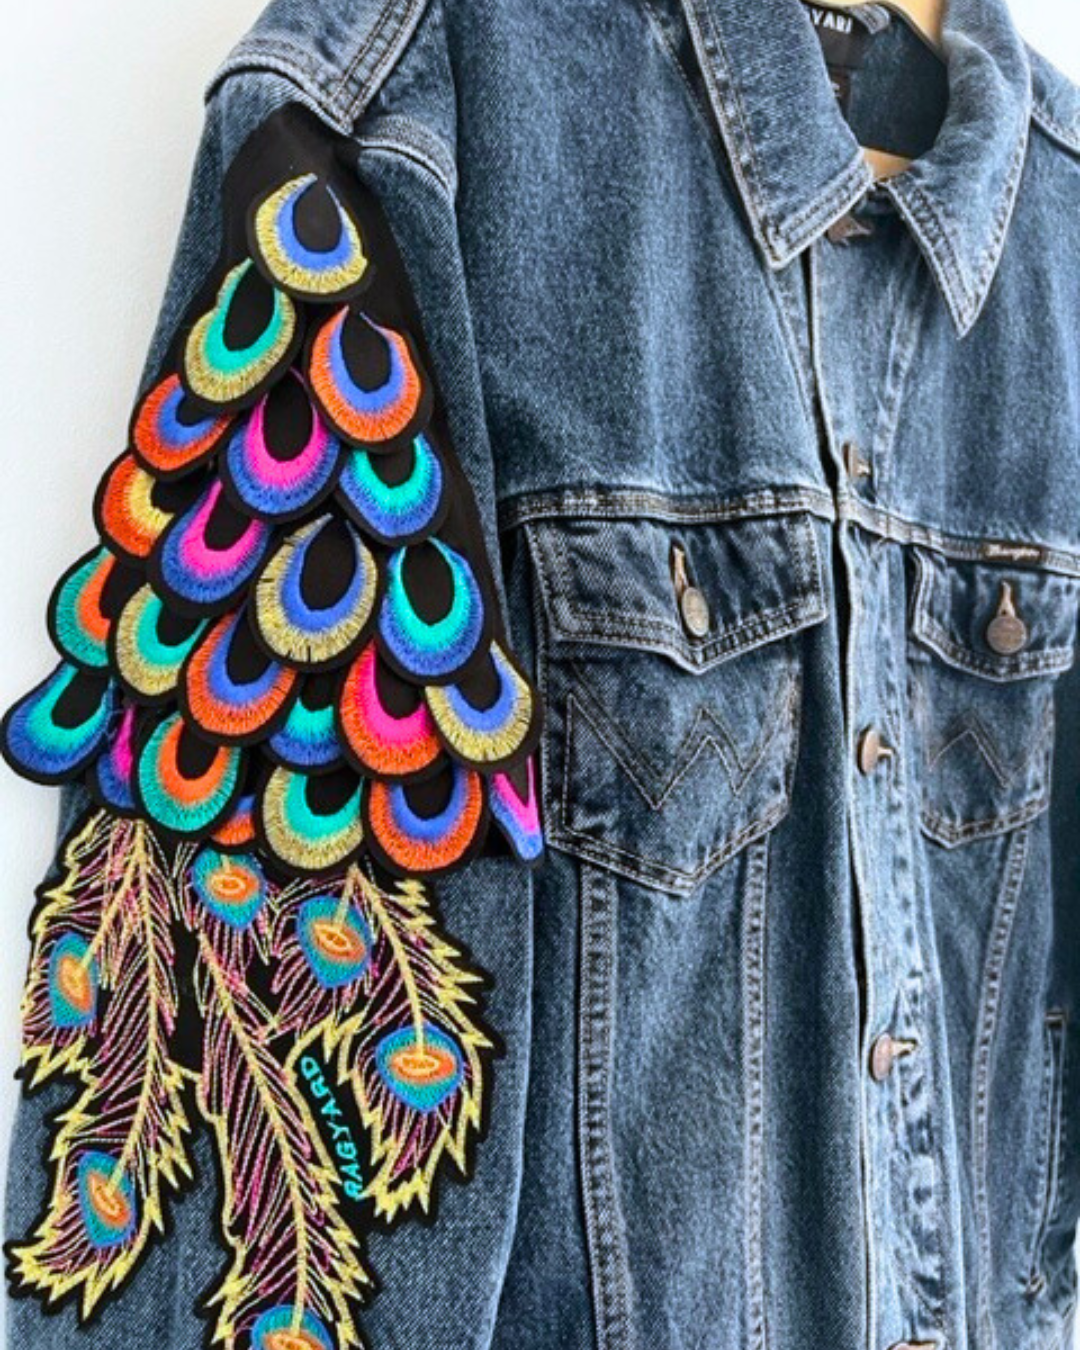 Vintage WRANGLER dark blue denim jacket with psychedelic peacock sleeve embellishment